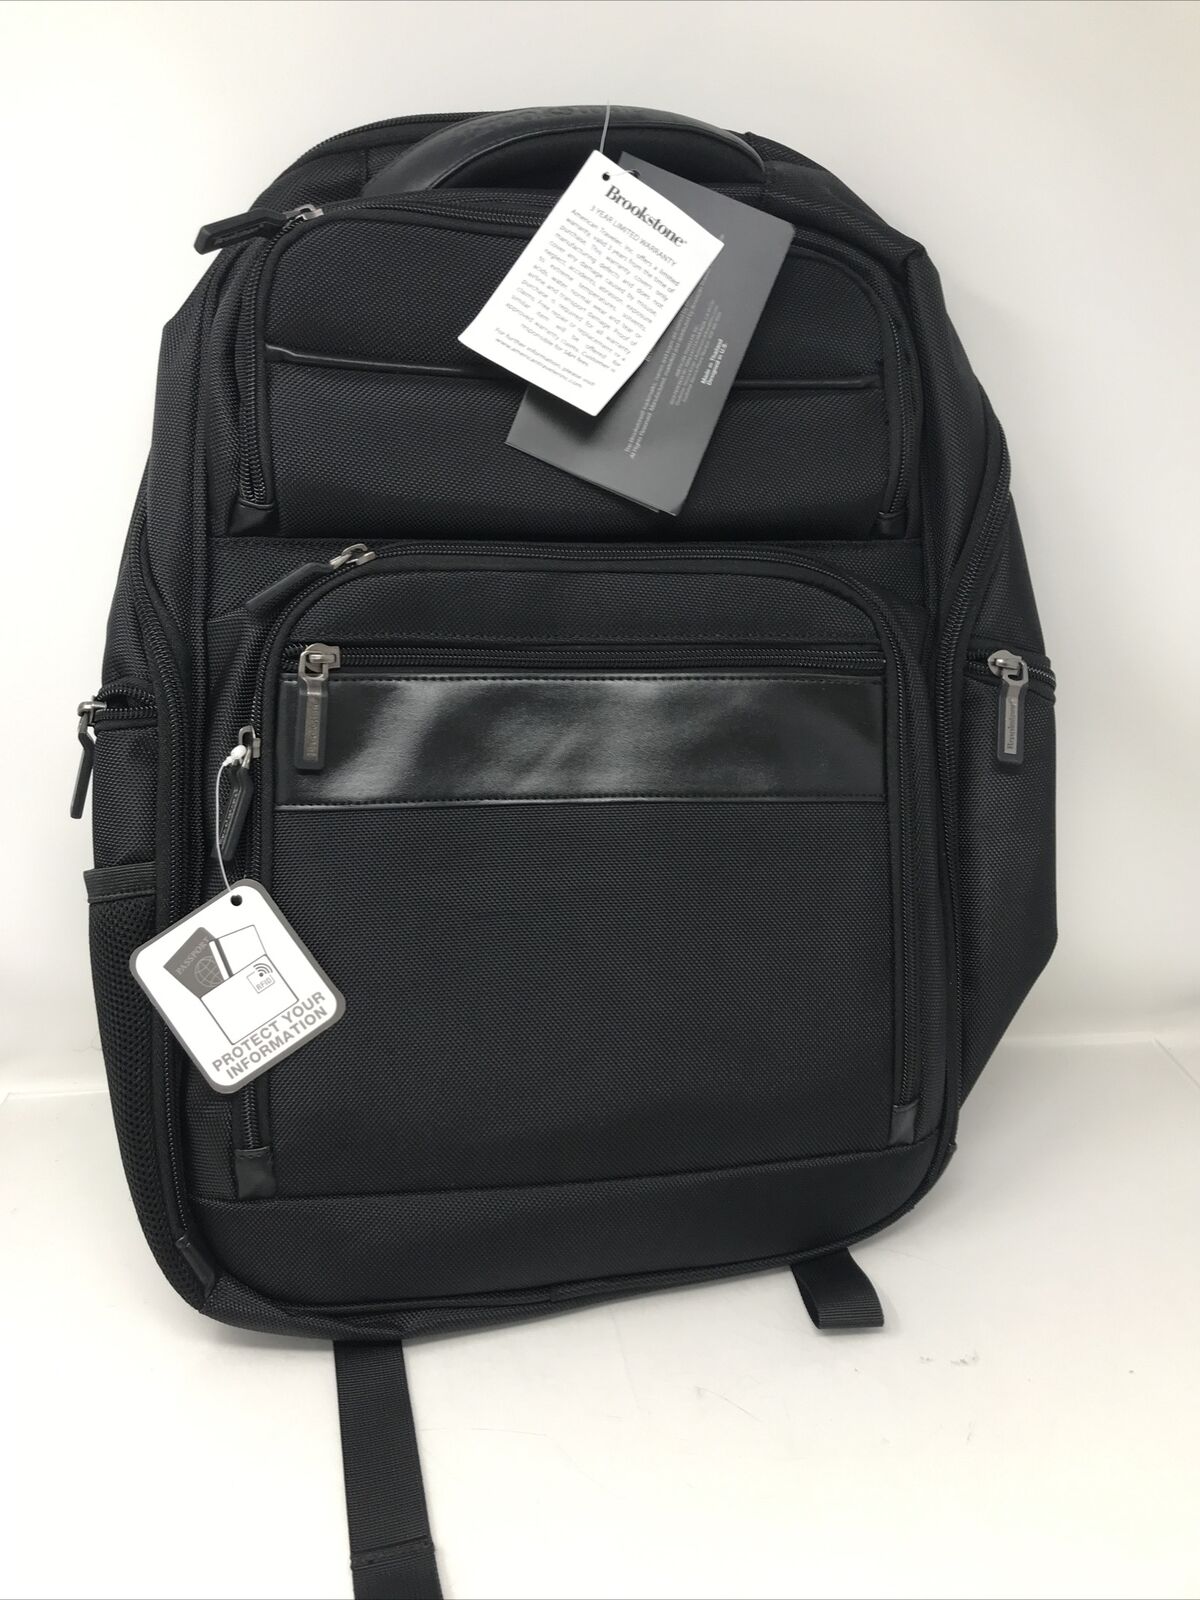 Brookstone Luggage Laptop Backpack, Black, 18 Inch